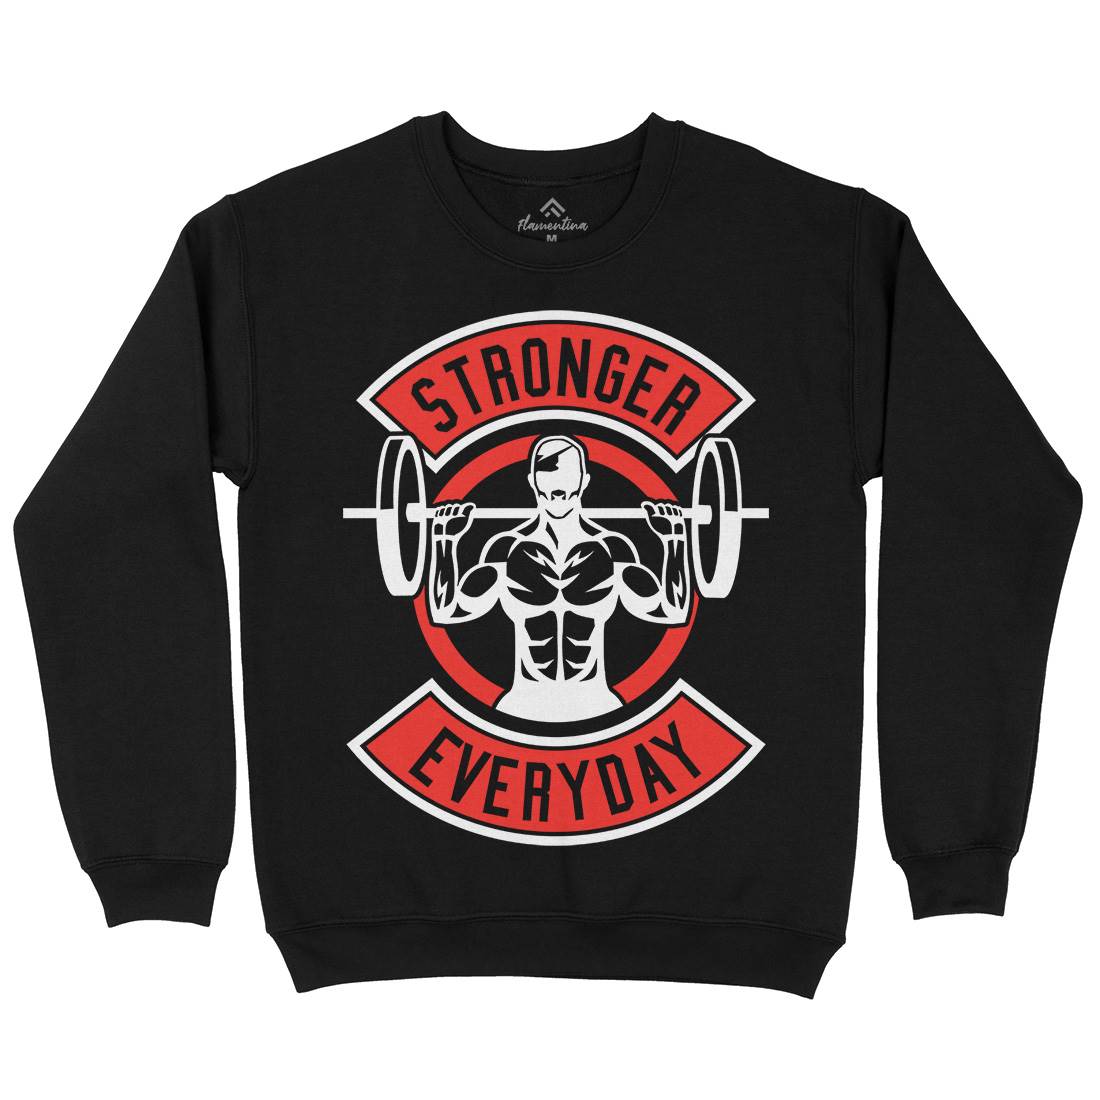 Stronger Everyday Kids Crew Neck Sweatshirt Gym A289